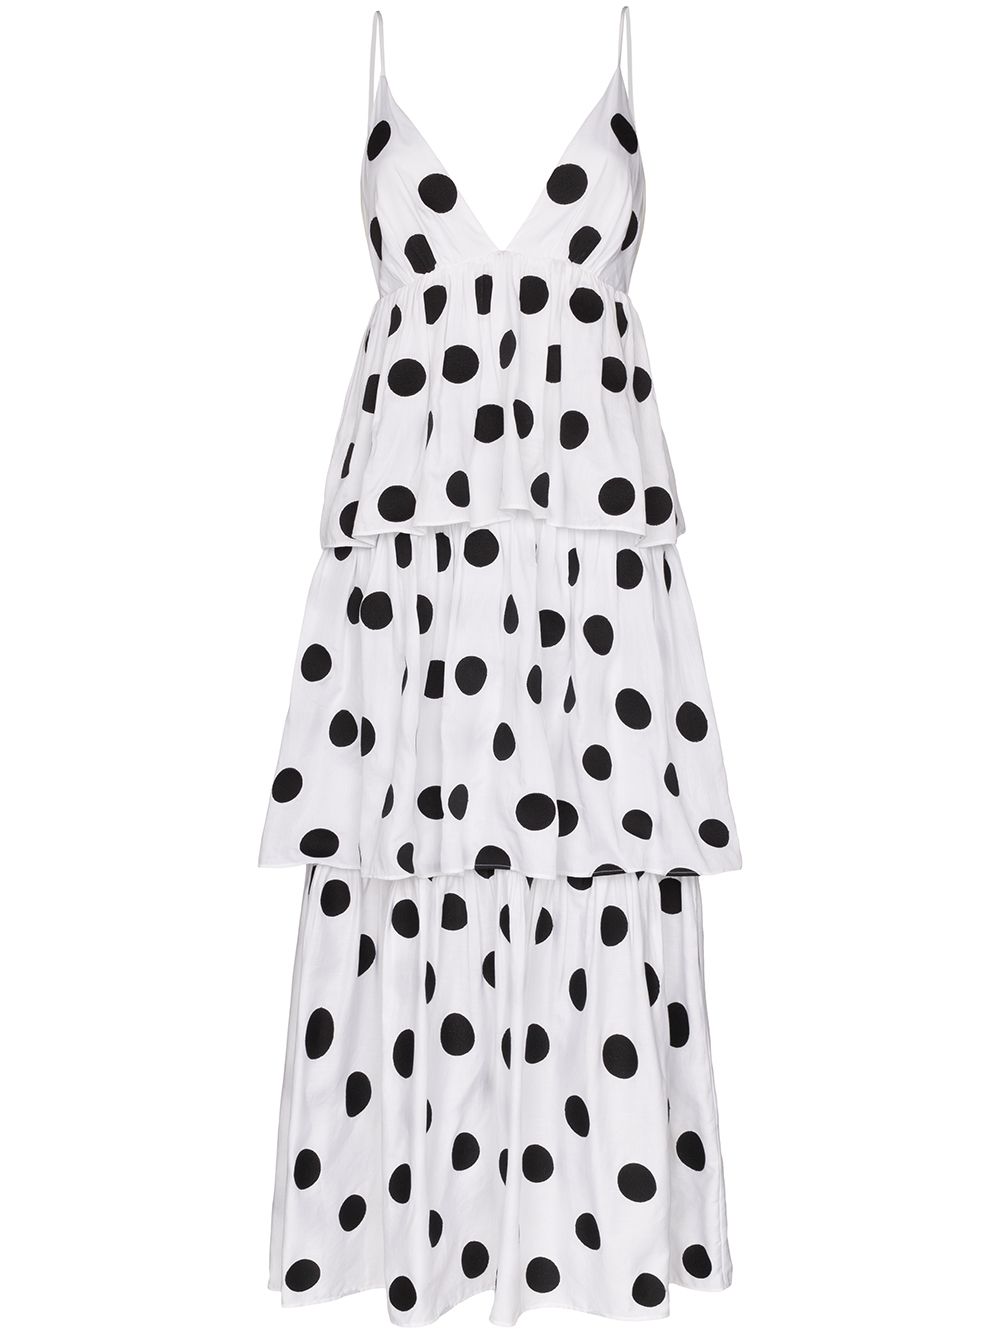 white dress with white polka dots